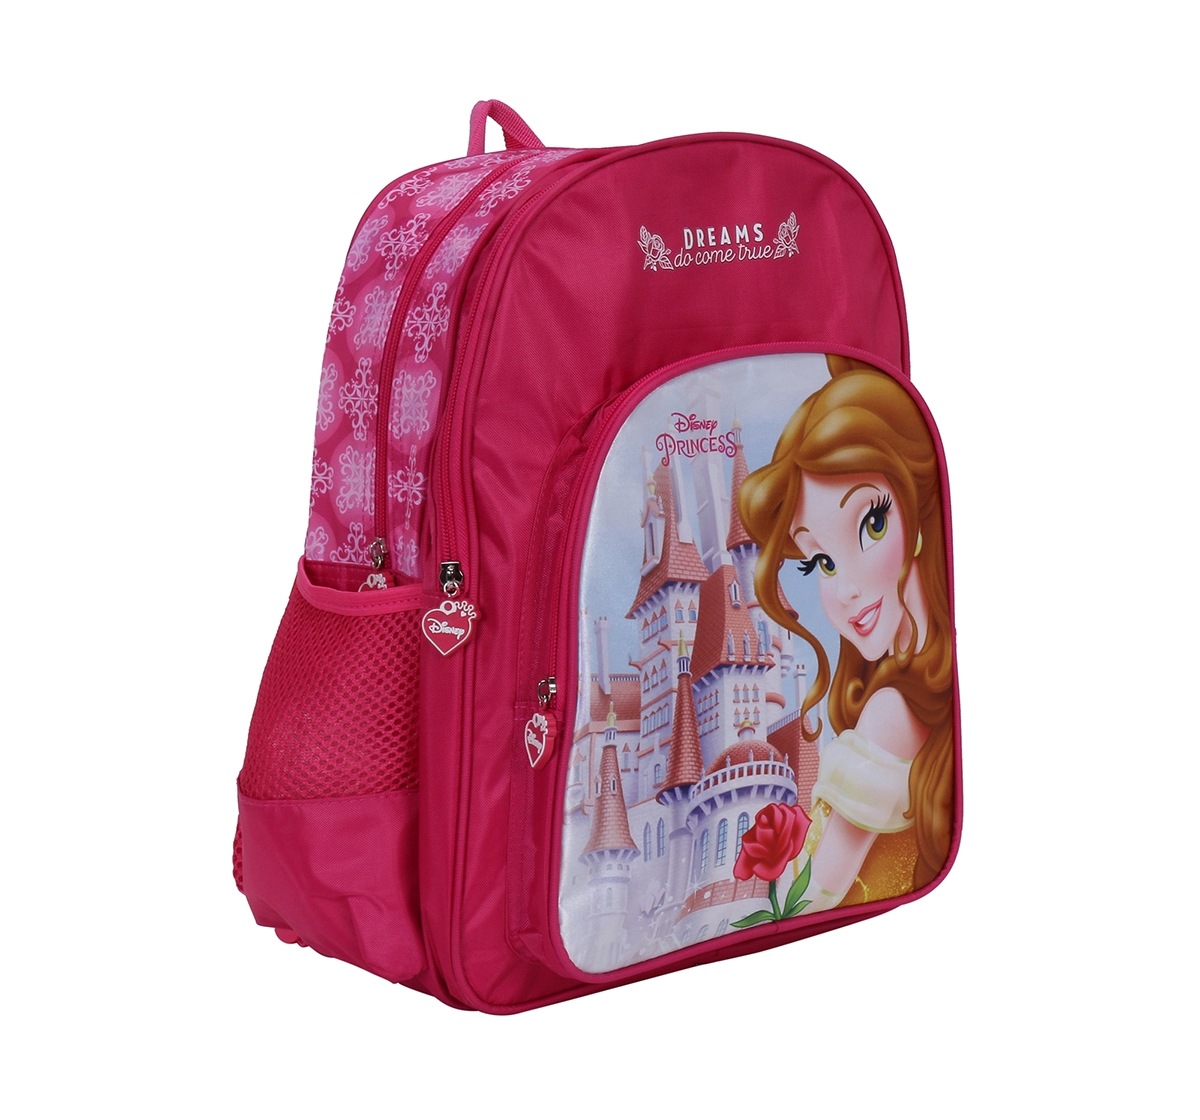 DISNEY | Disney Princess Castle 18" Backpack Bags for Girls age 3Y+  1